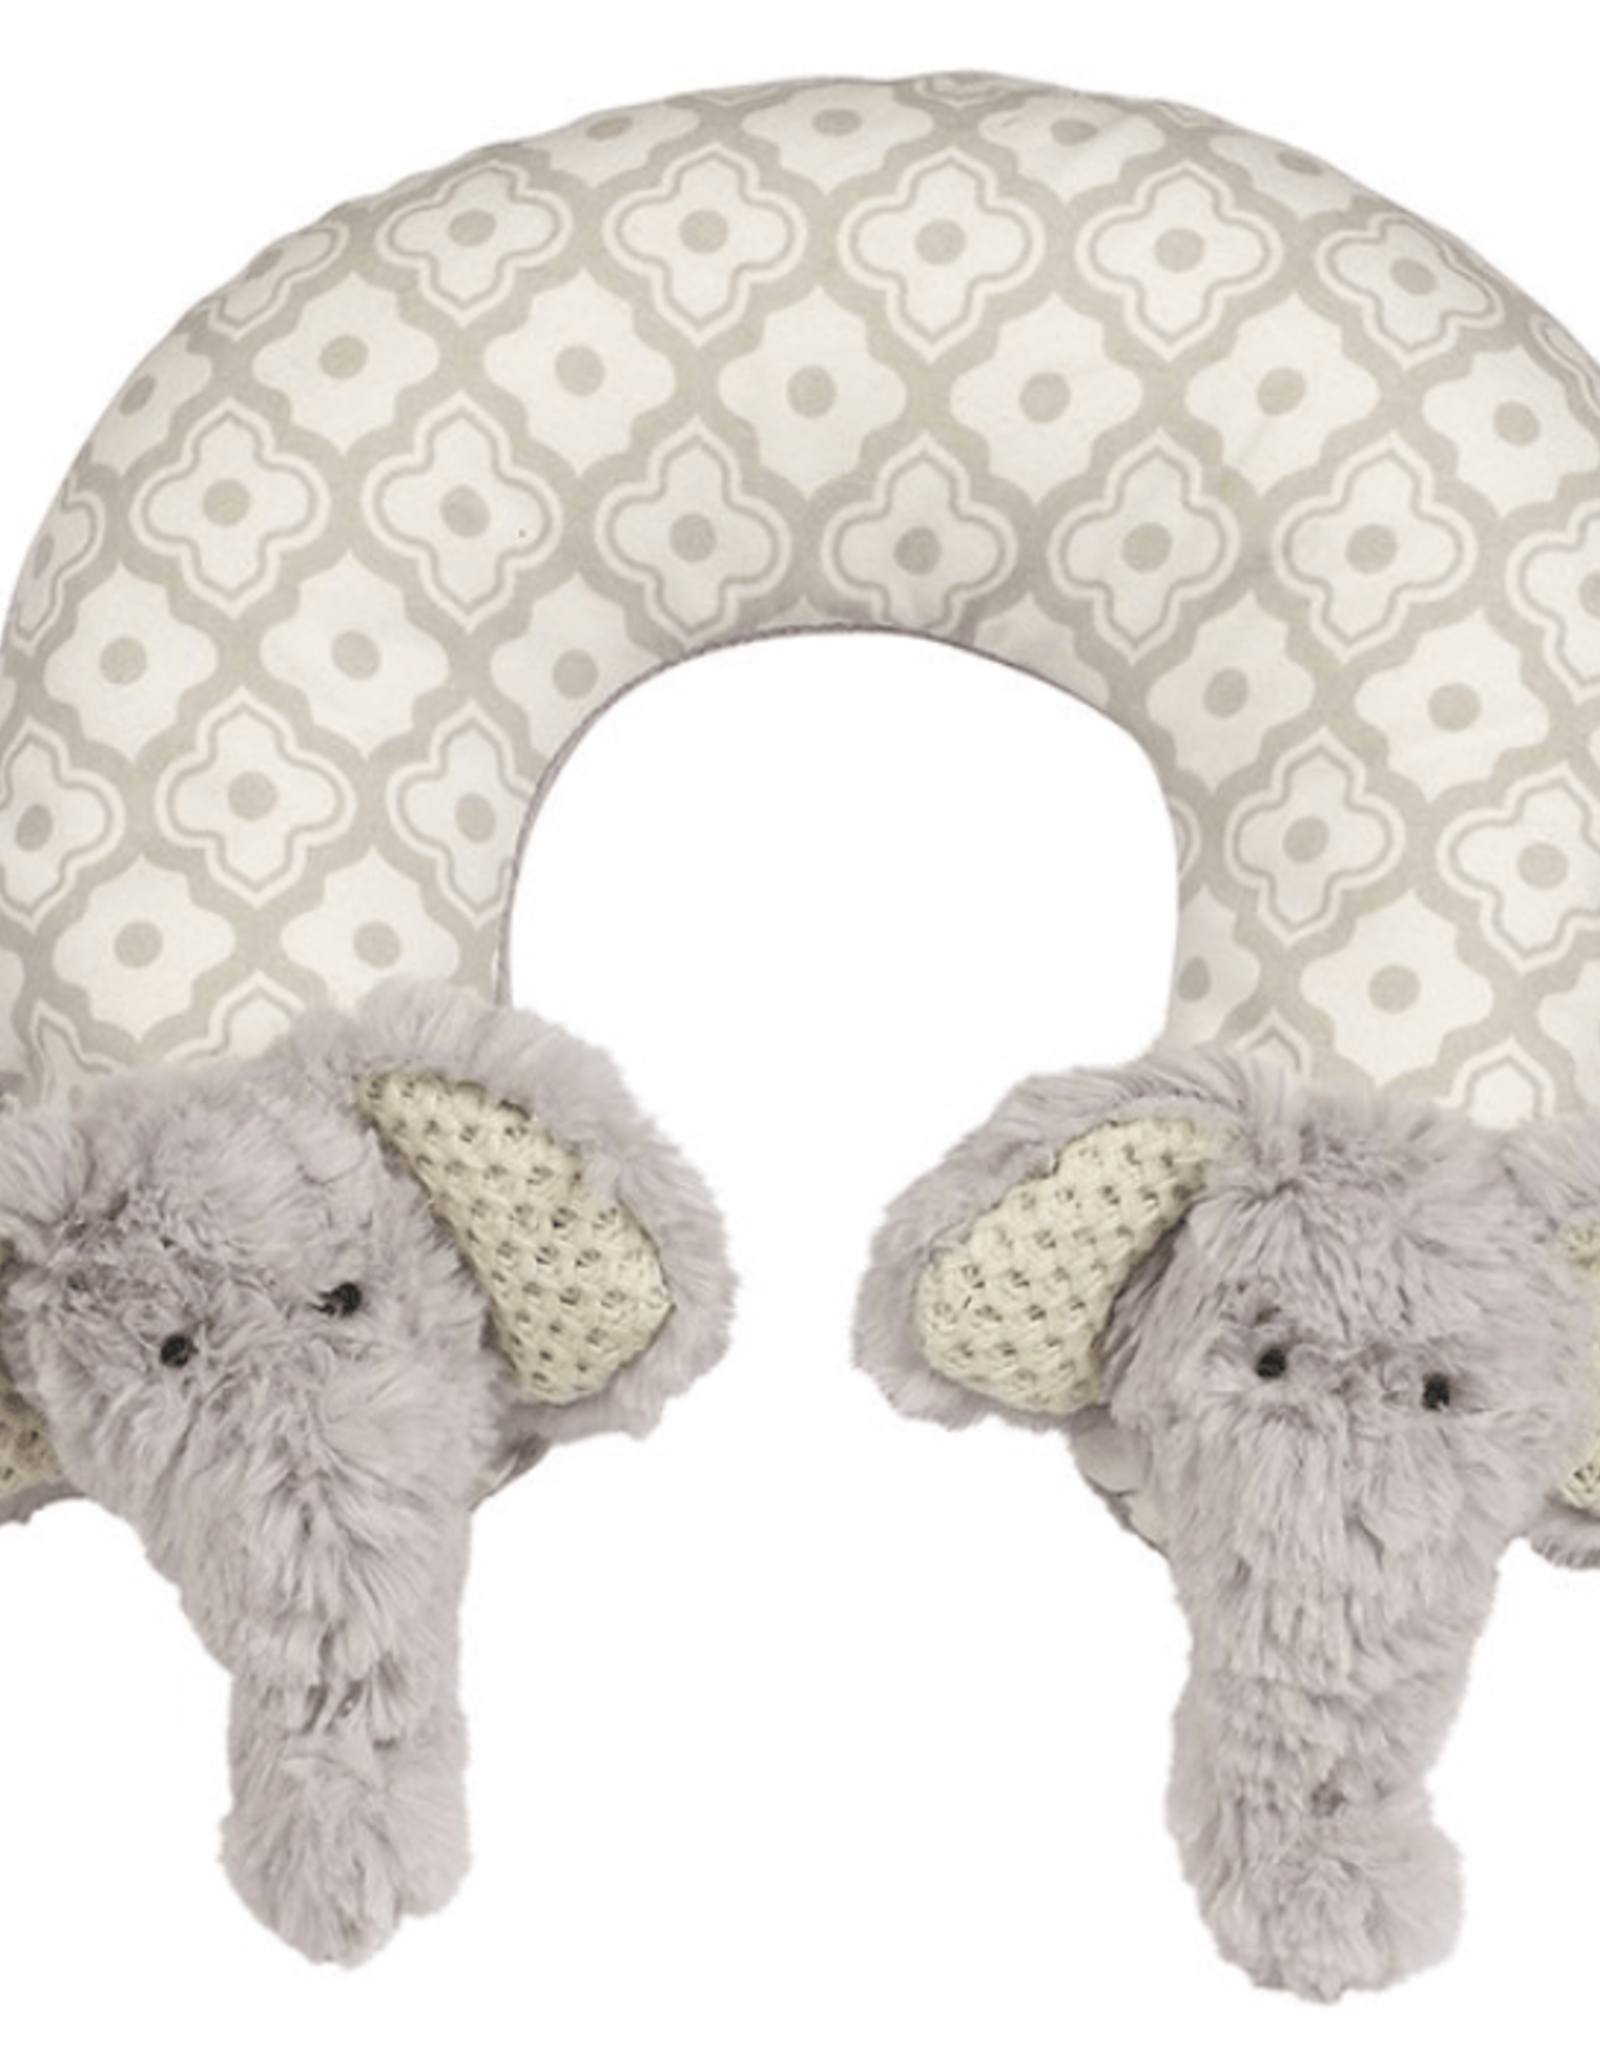 Neck Pillow - Emerson the Elephant